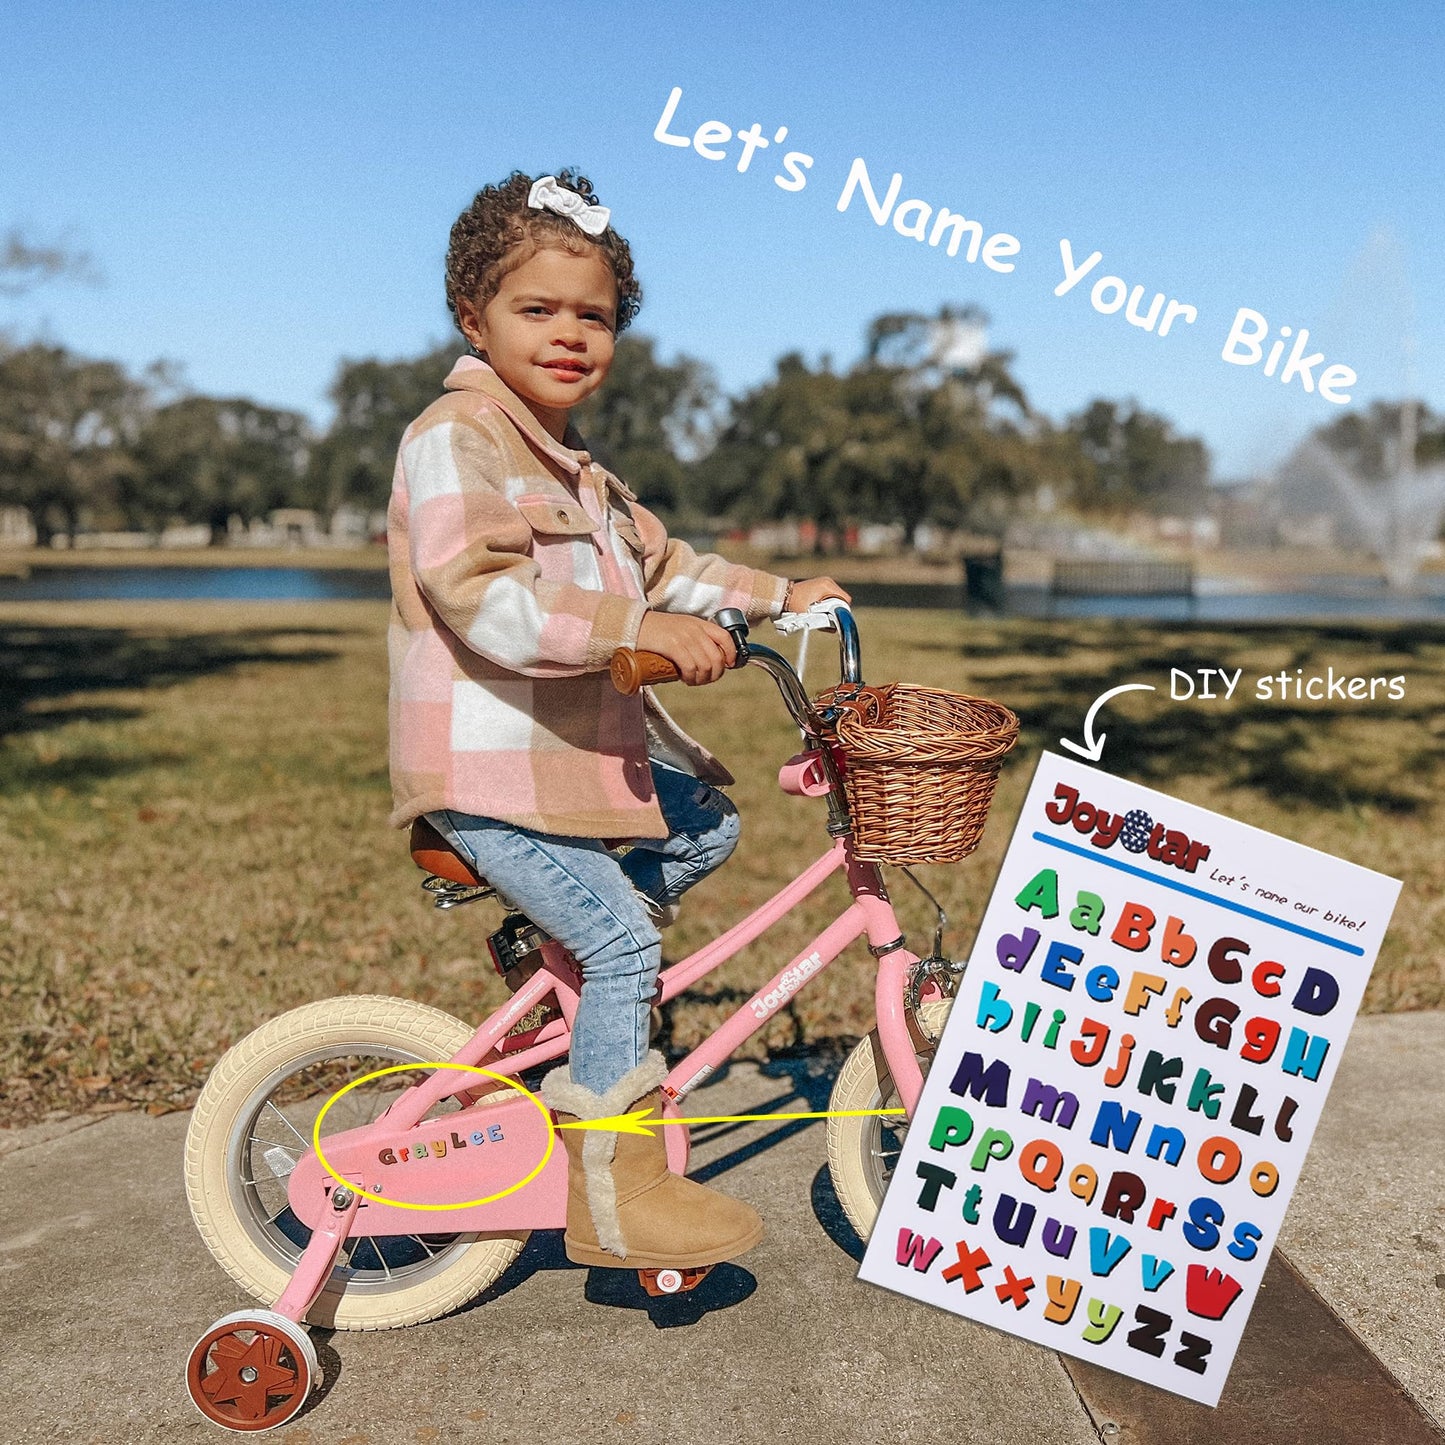 JOYSTAR 16 inch Kids Bike for 4-7 Years (41"-53") Girls, Girls Bike with Training Wheels & Basket, Kids' Bicycle Pink